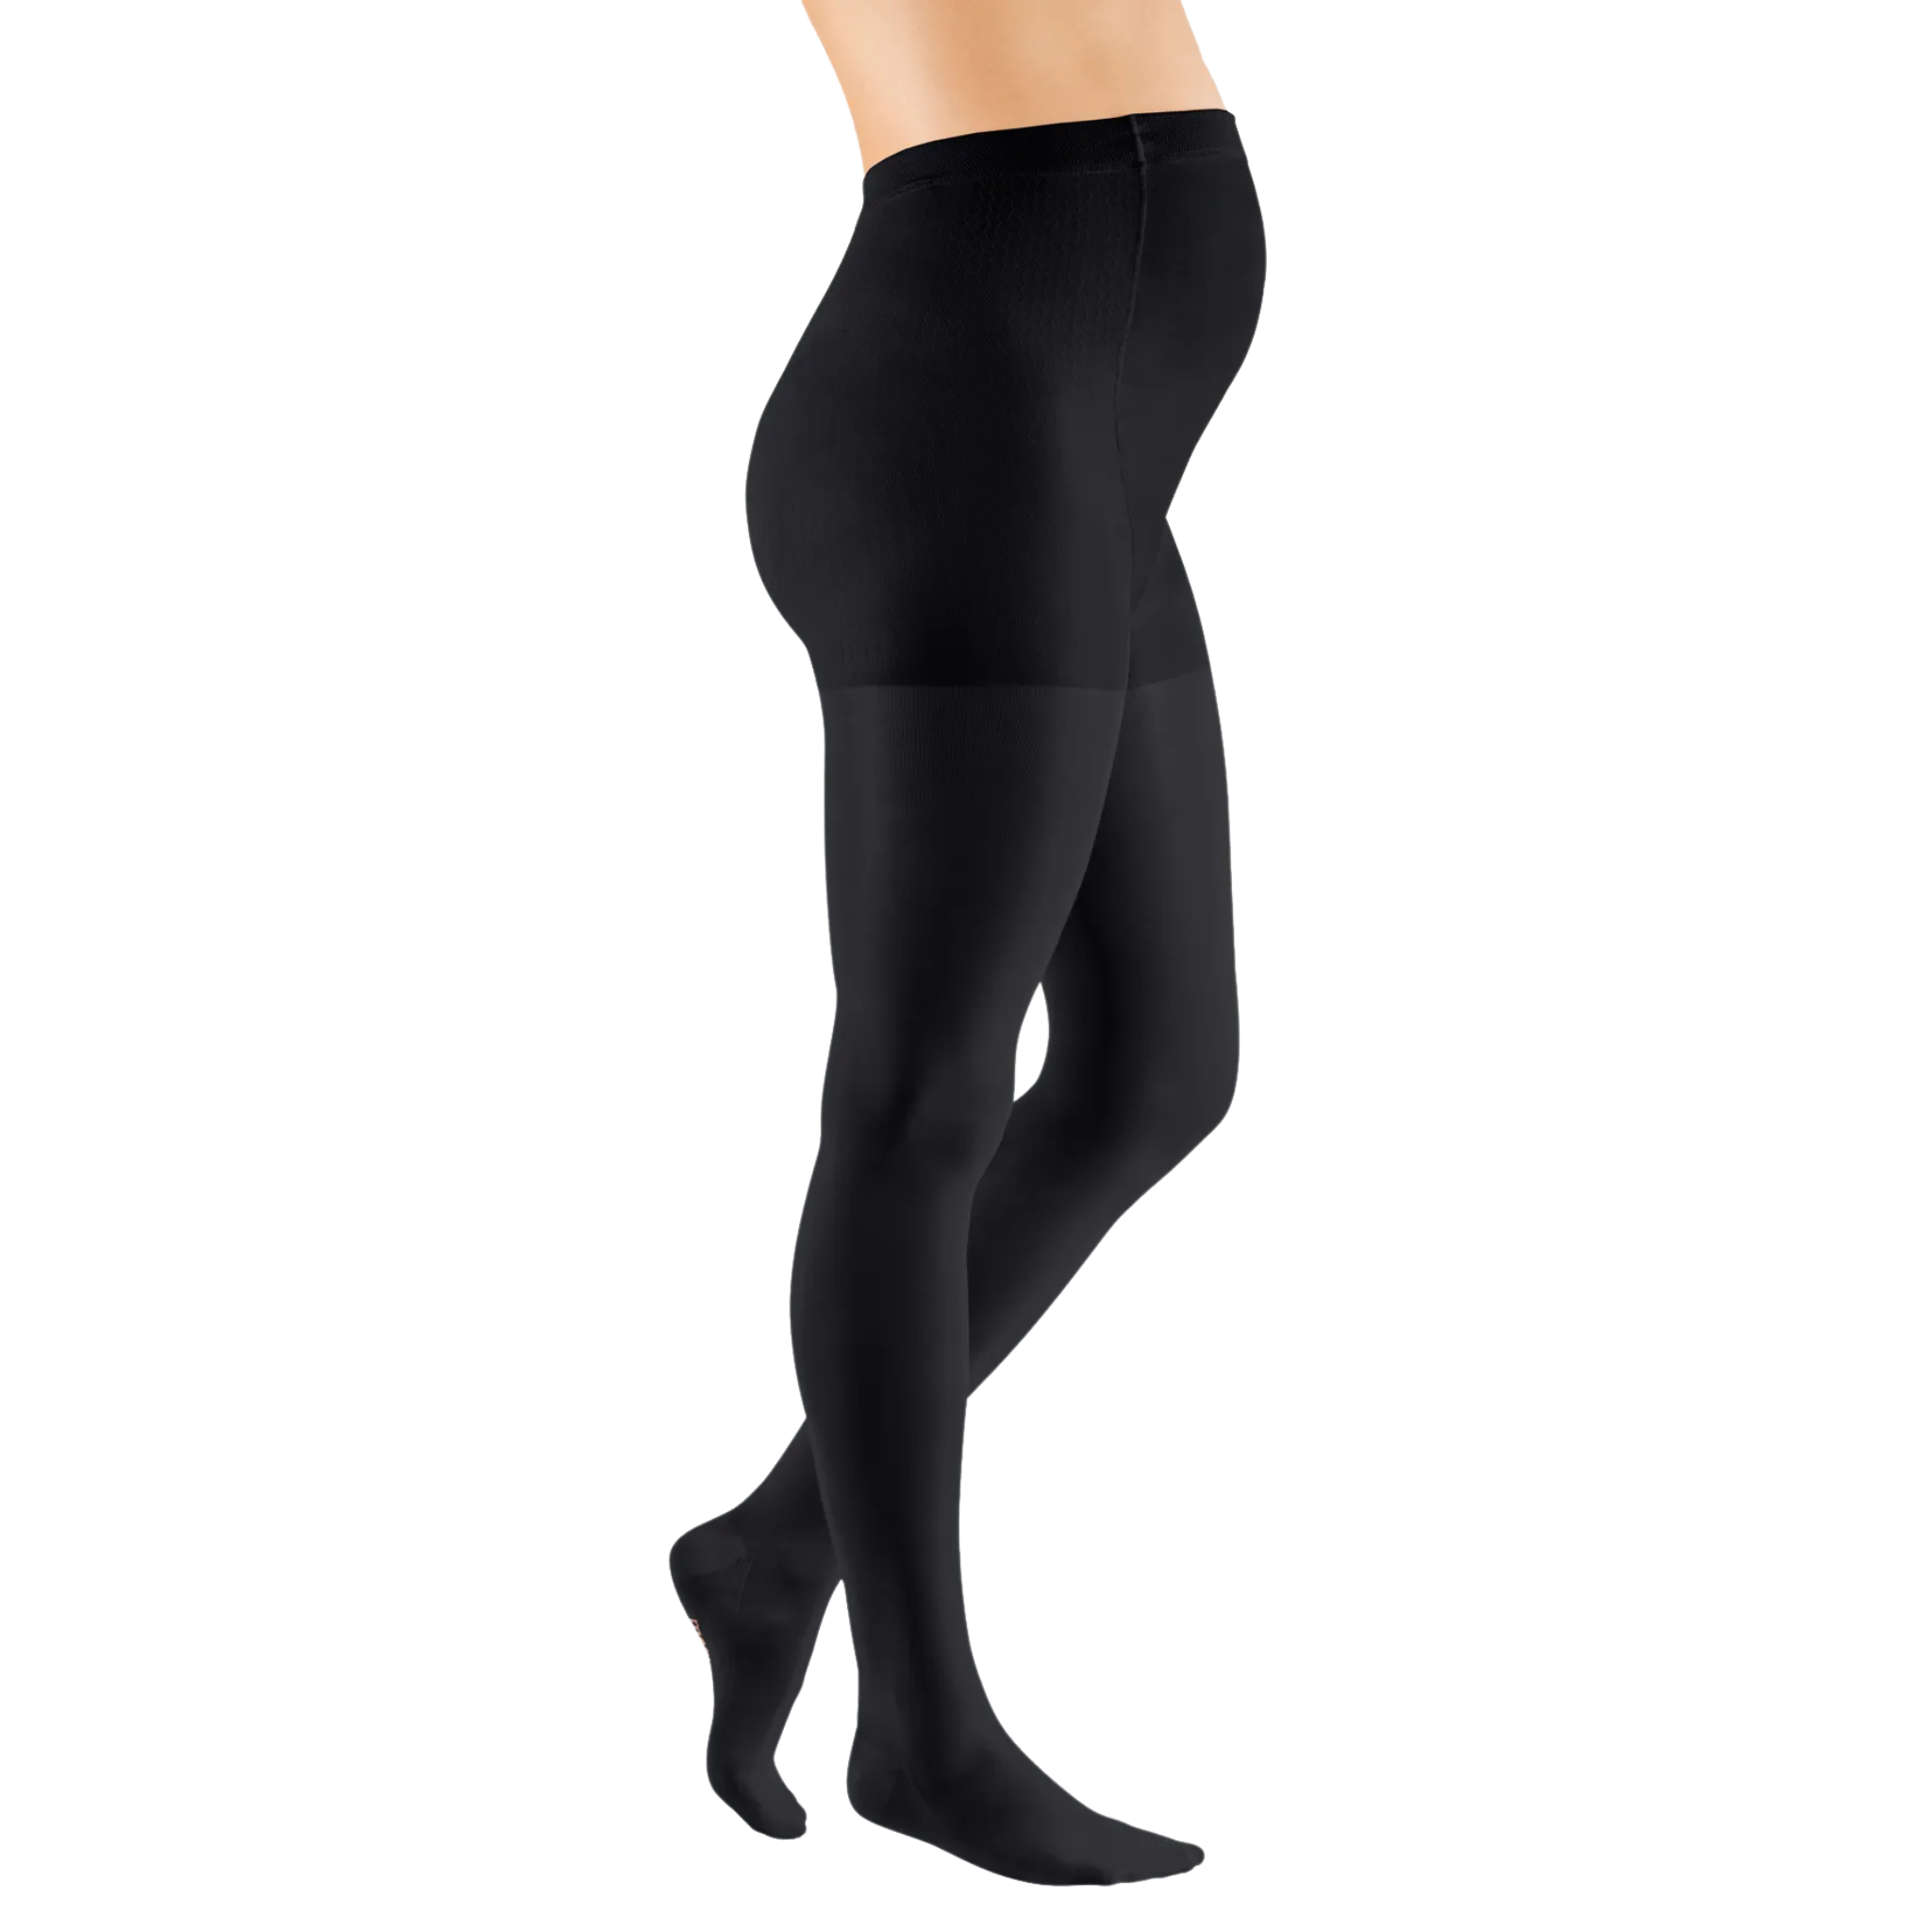 Compression Stockings  Maternity Pantyhose  Closed Toe  Black  mediven elegance®